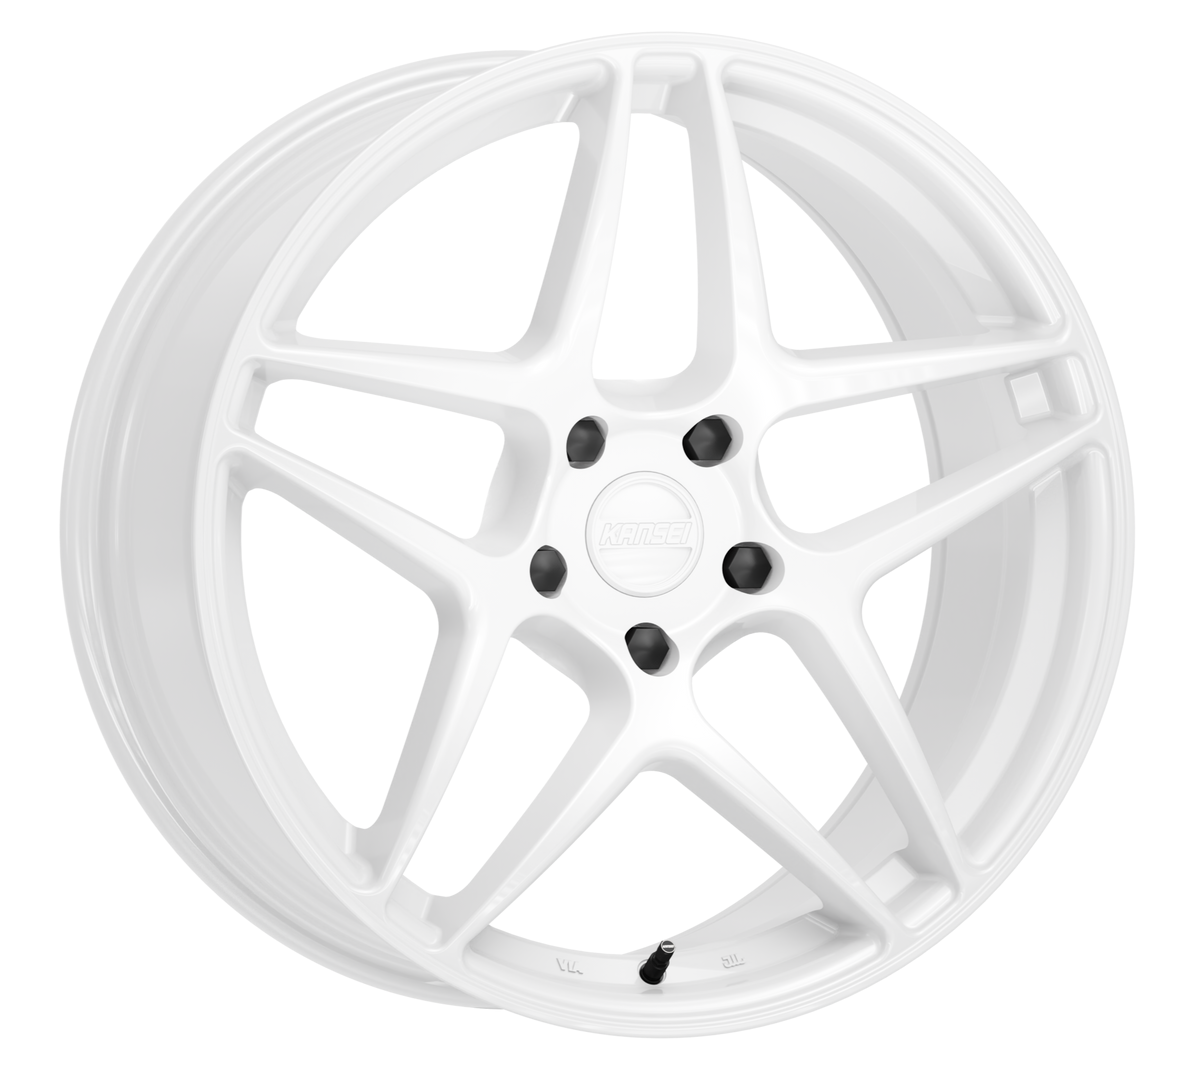 K15W ASTRO Wheel, Size: 18" x 9.50", Bolt Pattern: 5 x 100 mm, Backspace: 6.63" [Finish: Gloss White]